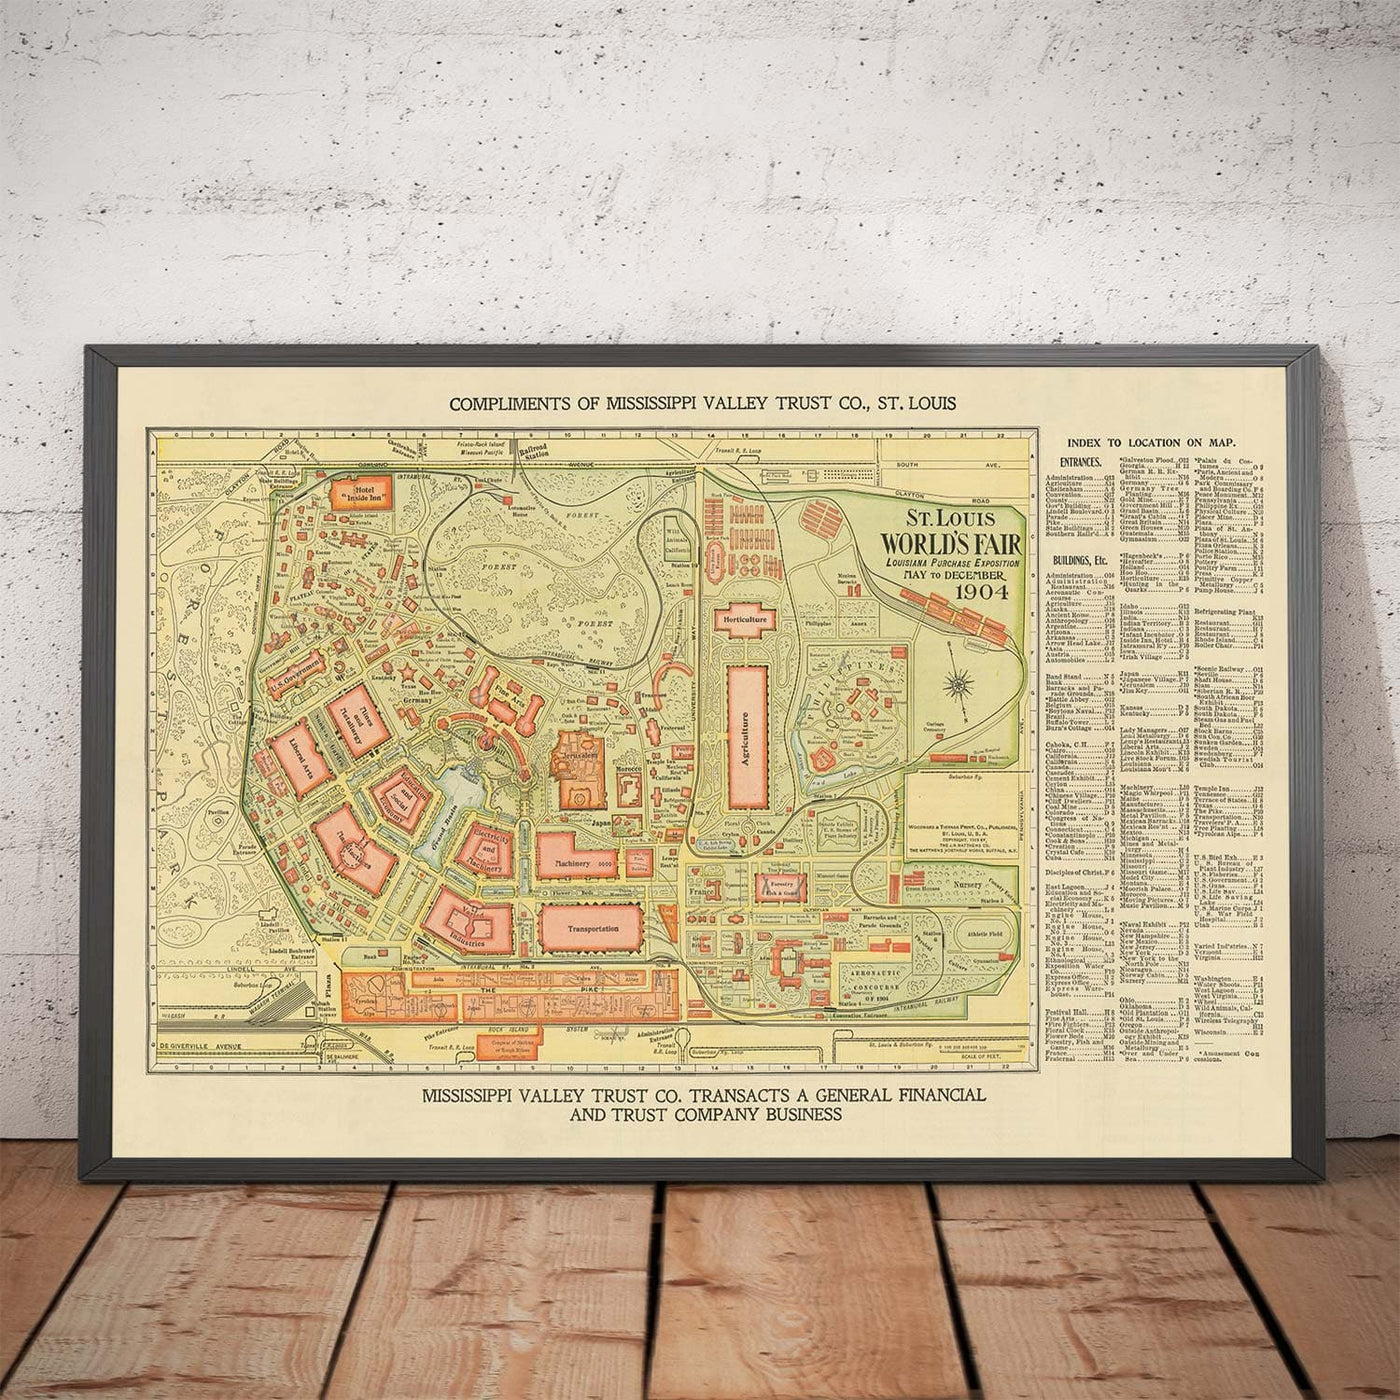 Old Map of St Louis, Missouri, 1904 - World's Fair, Louisiana Purchase Exposition - US History City Chart